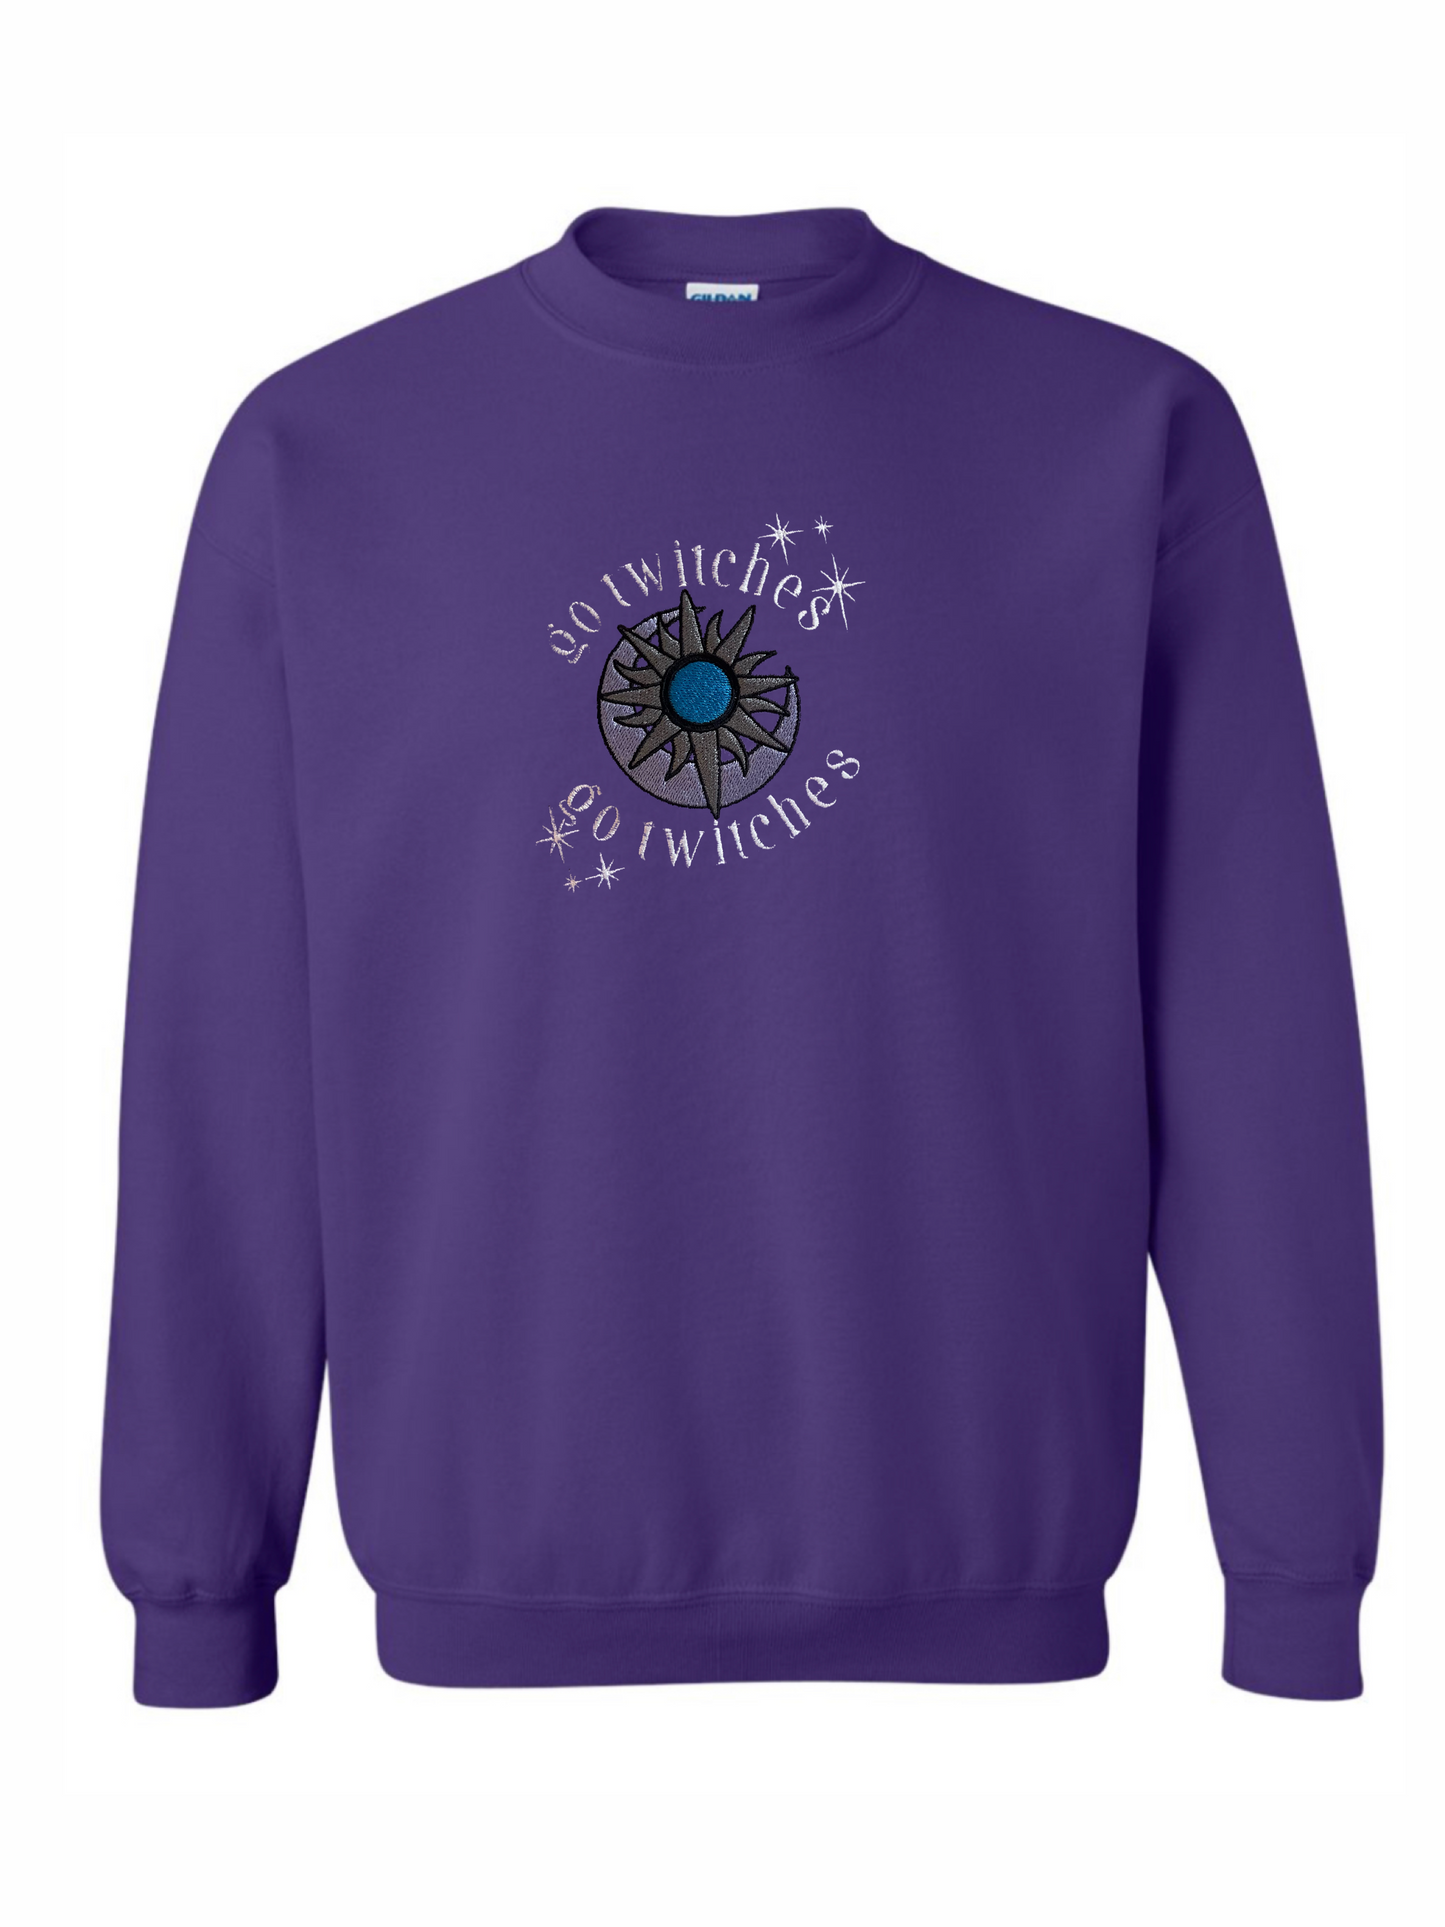 Go Twitches embroidered sweatshirt